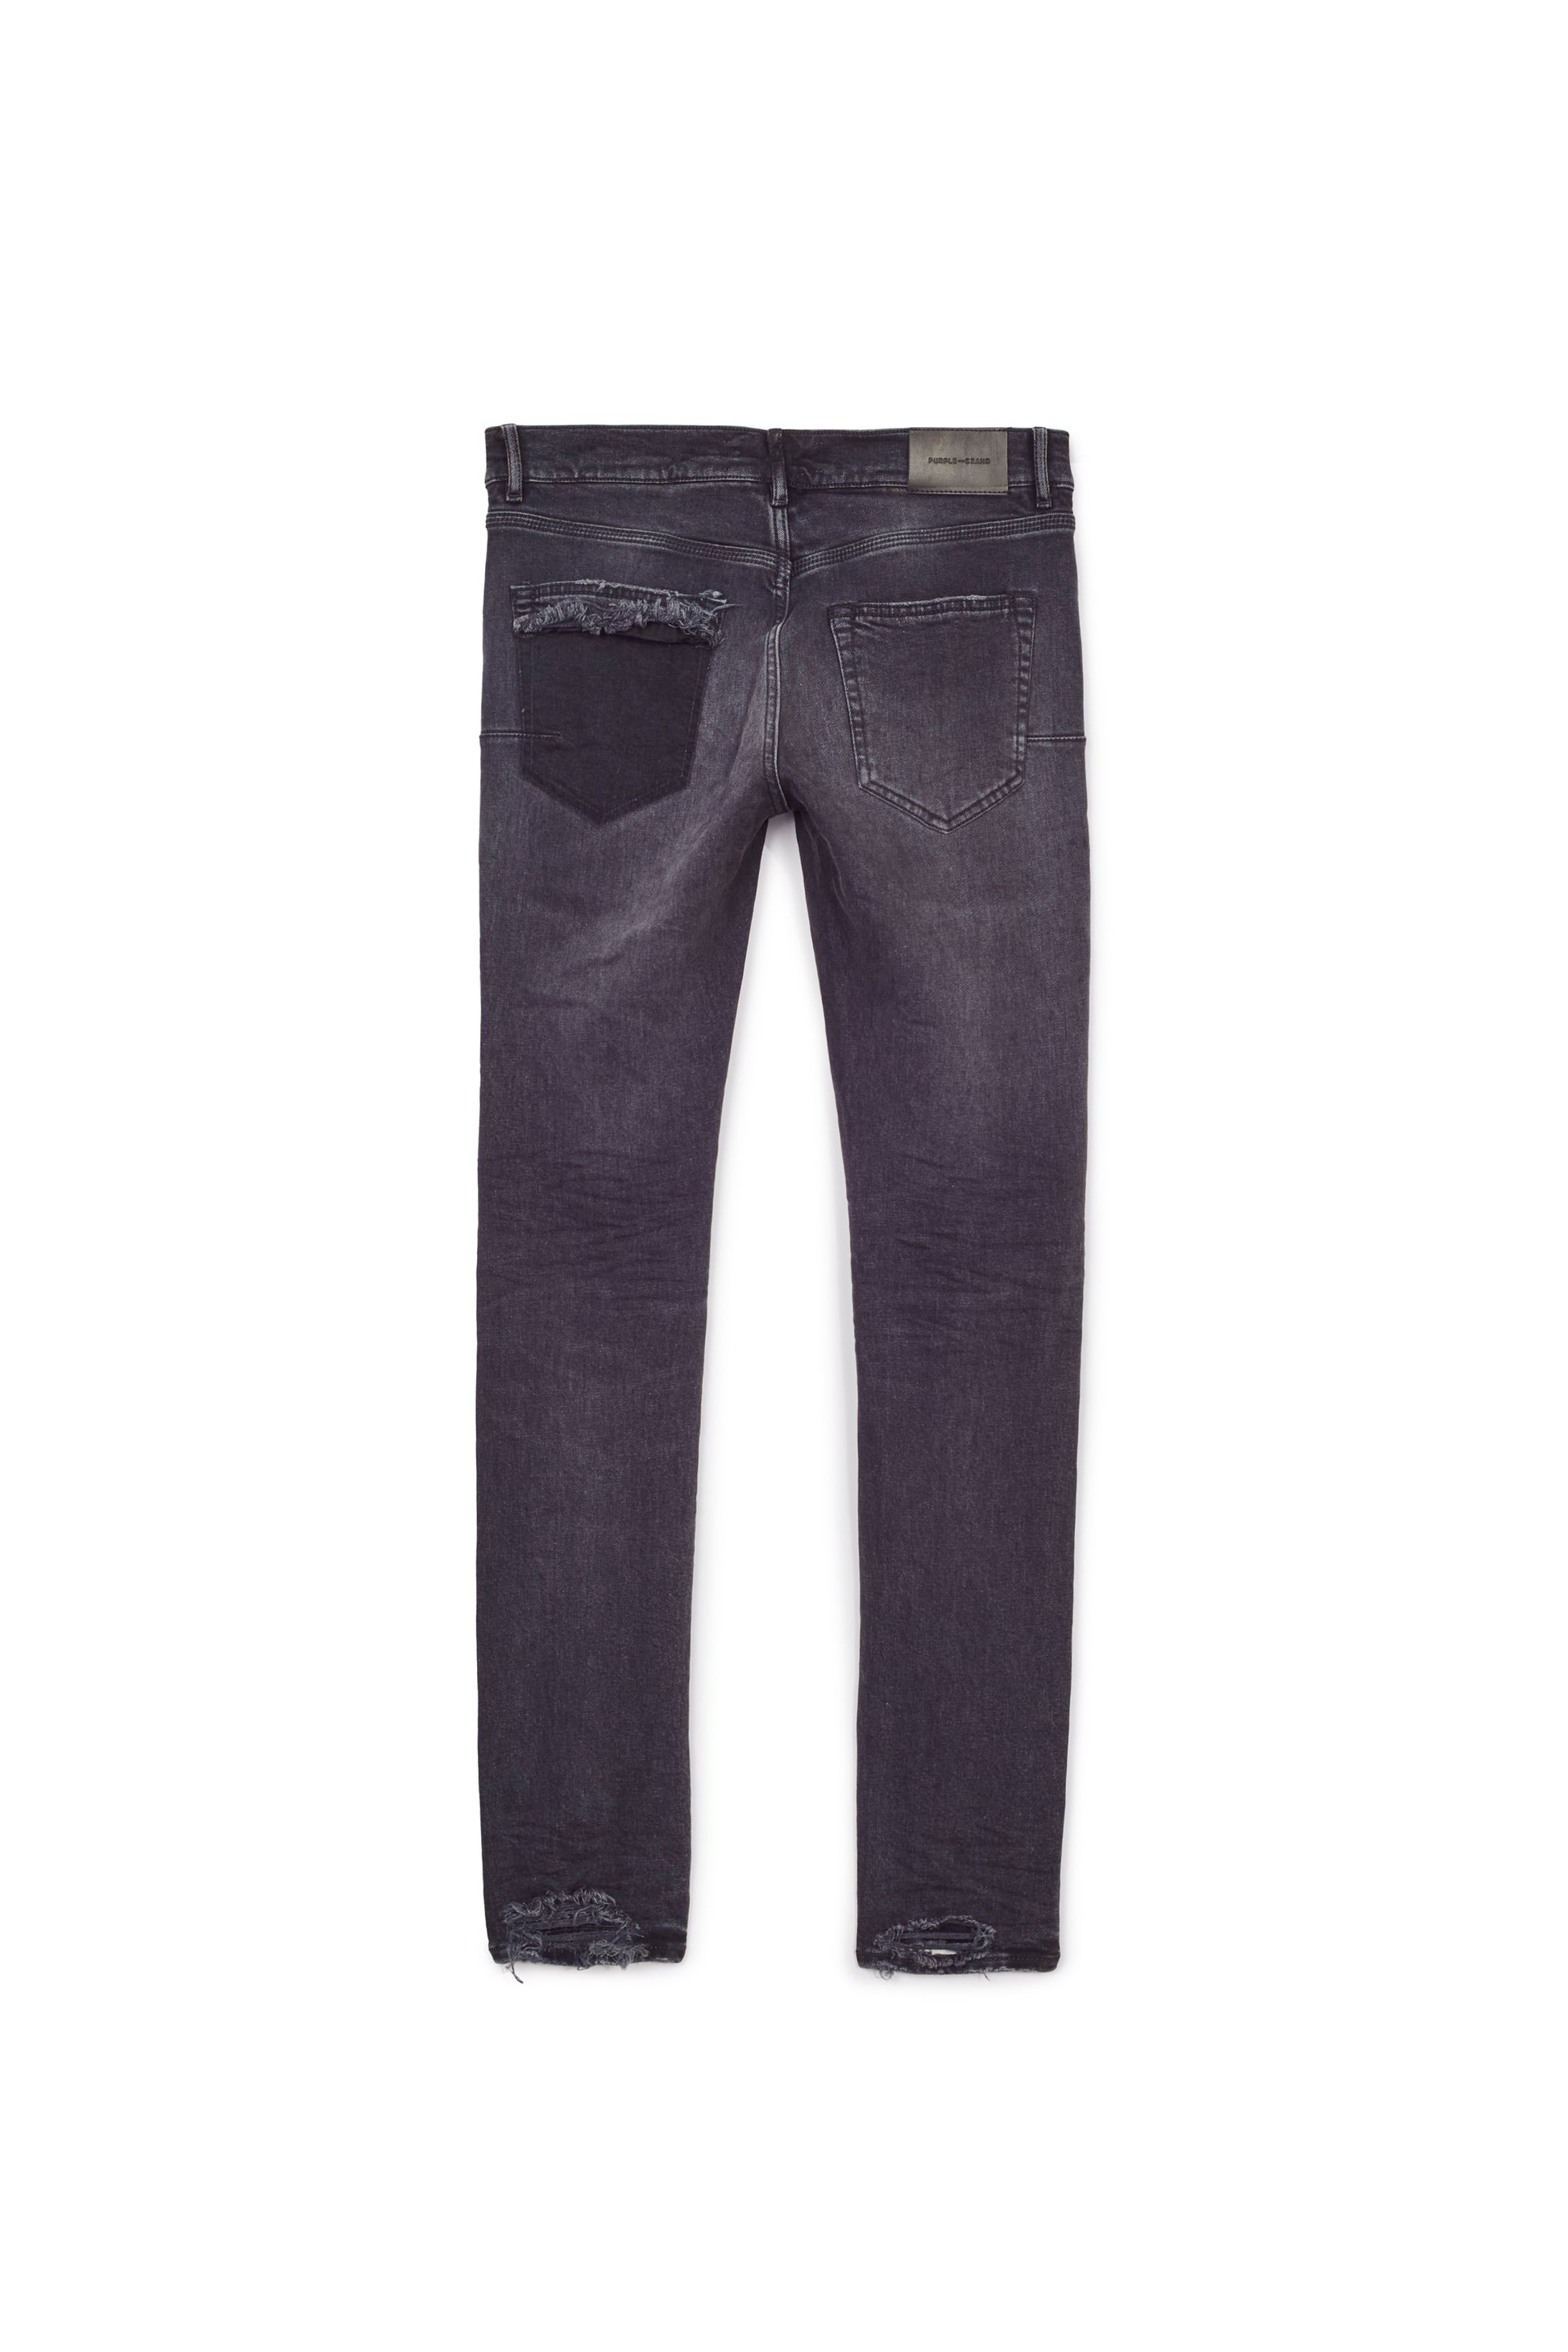 PURPLE BRAND - Men's Low Rise Skinny Jean - Style No. P001 - Black Four Pocket Destroy - Back